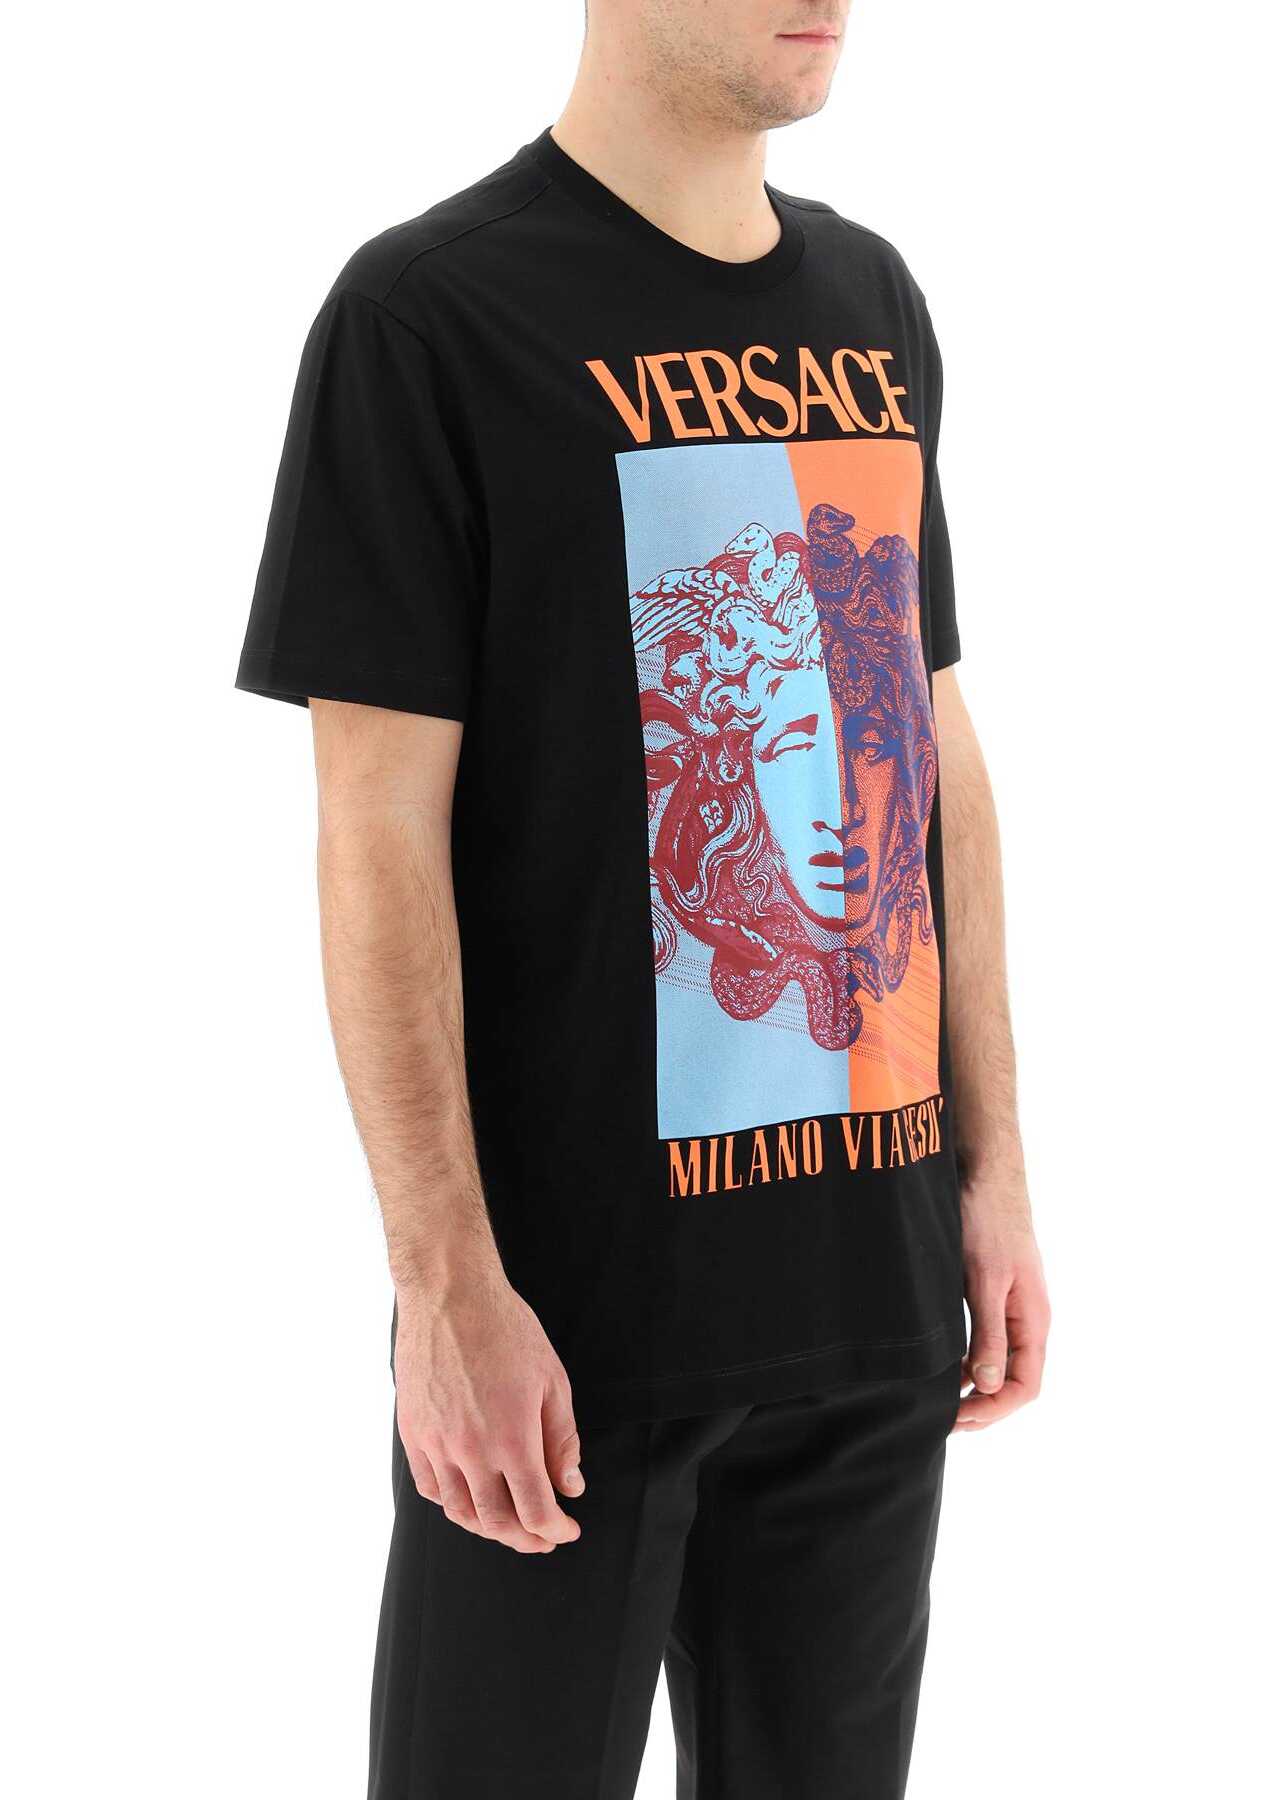 Versace Mitchel Fit Printed T-Shirt BLACK